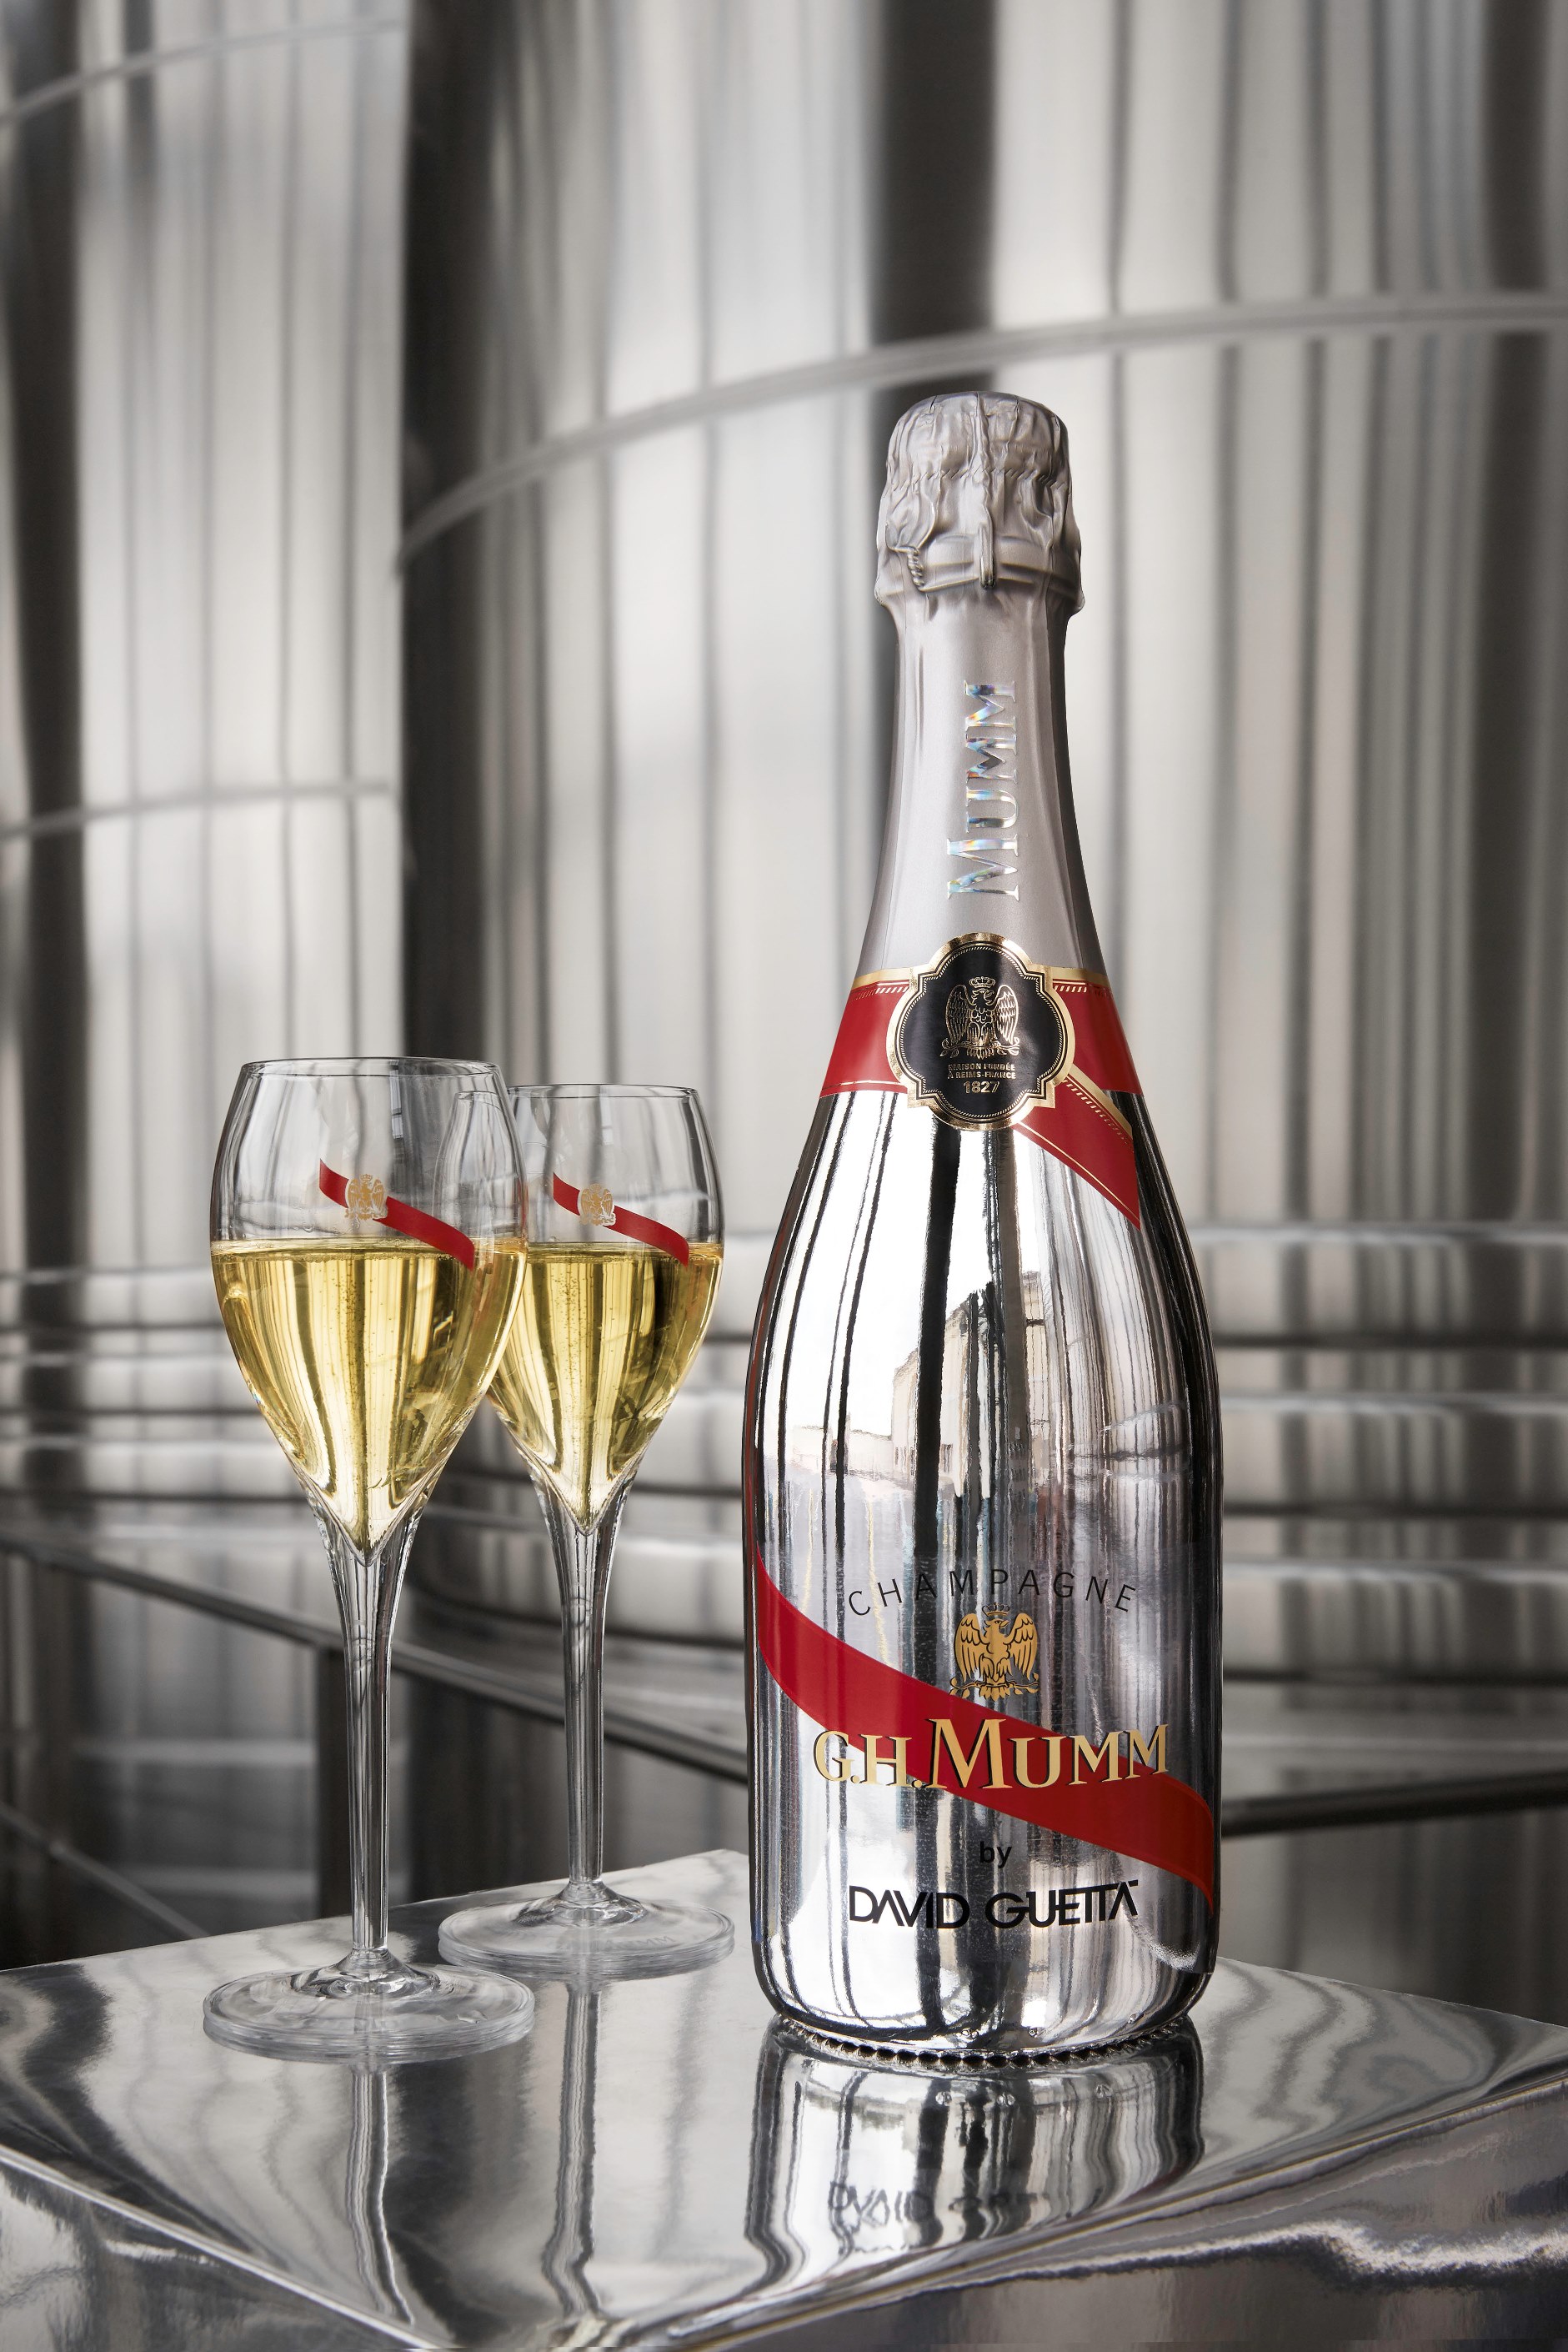 Mumm Champagne Limited Edition by David Guetta, le foto